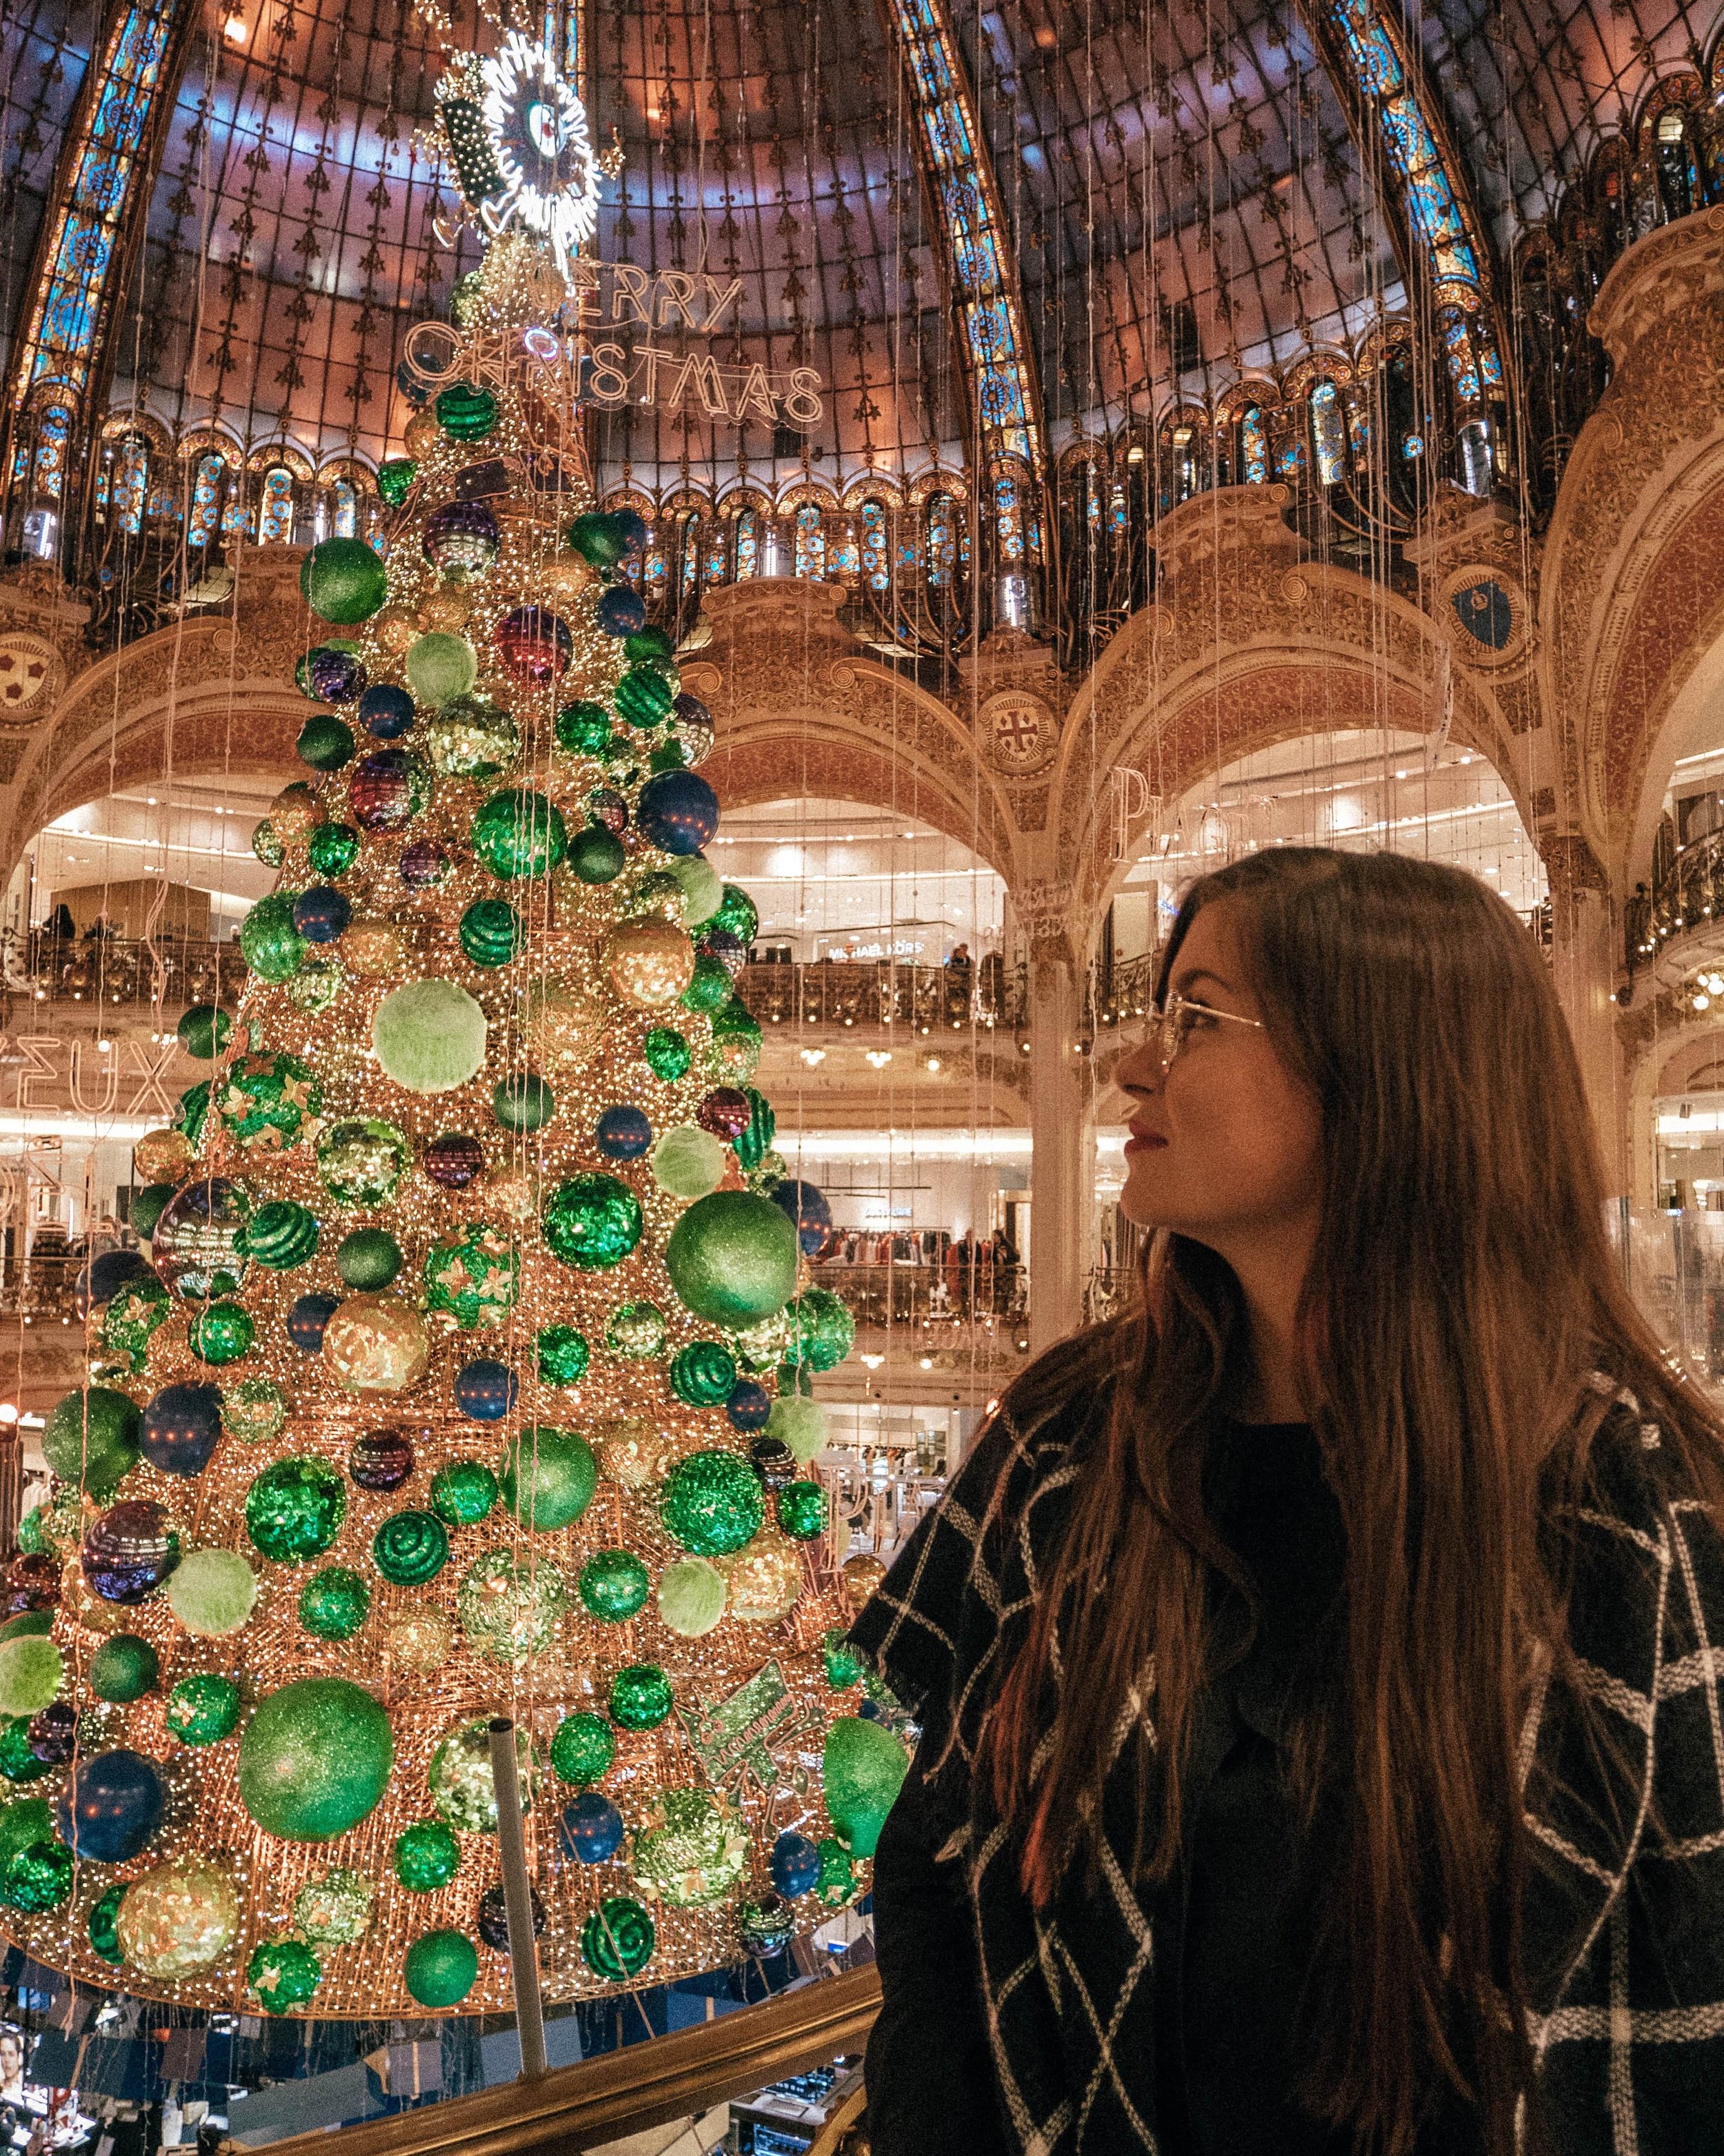 Galeries Lafayette Christmas Tree 2019 - Paris - France